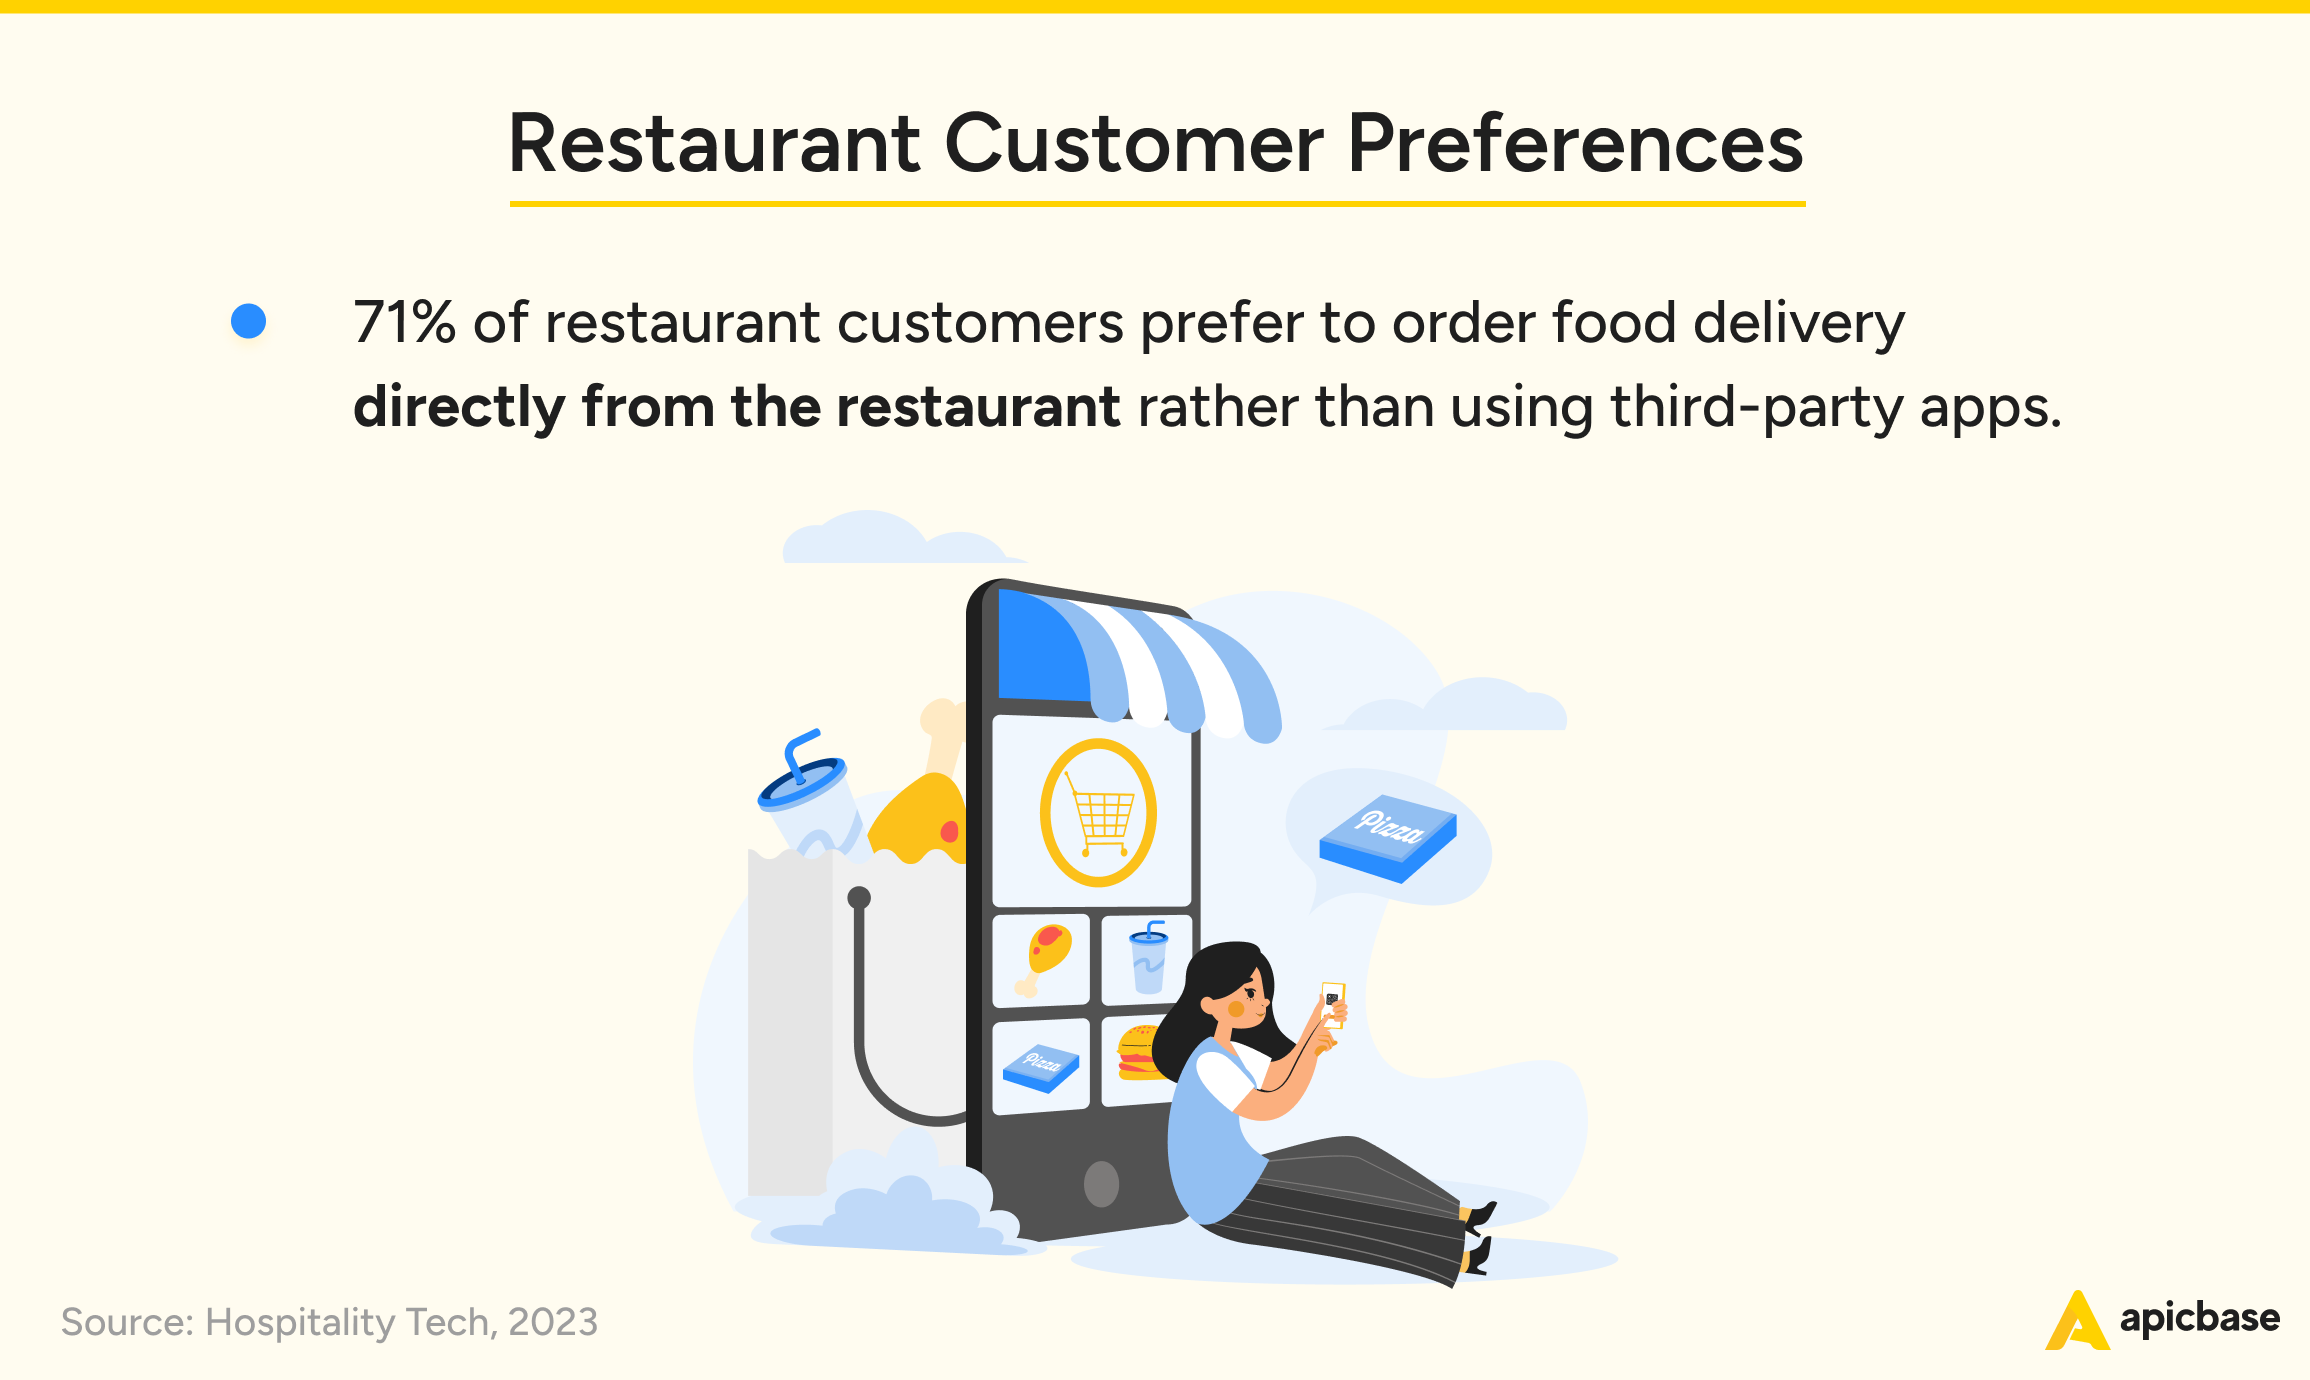 Restaurant Customer Preferences Statistics